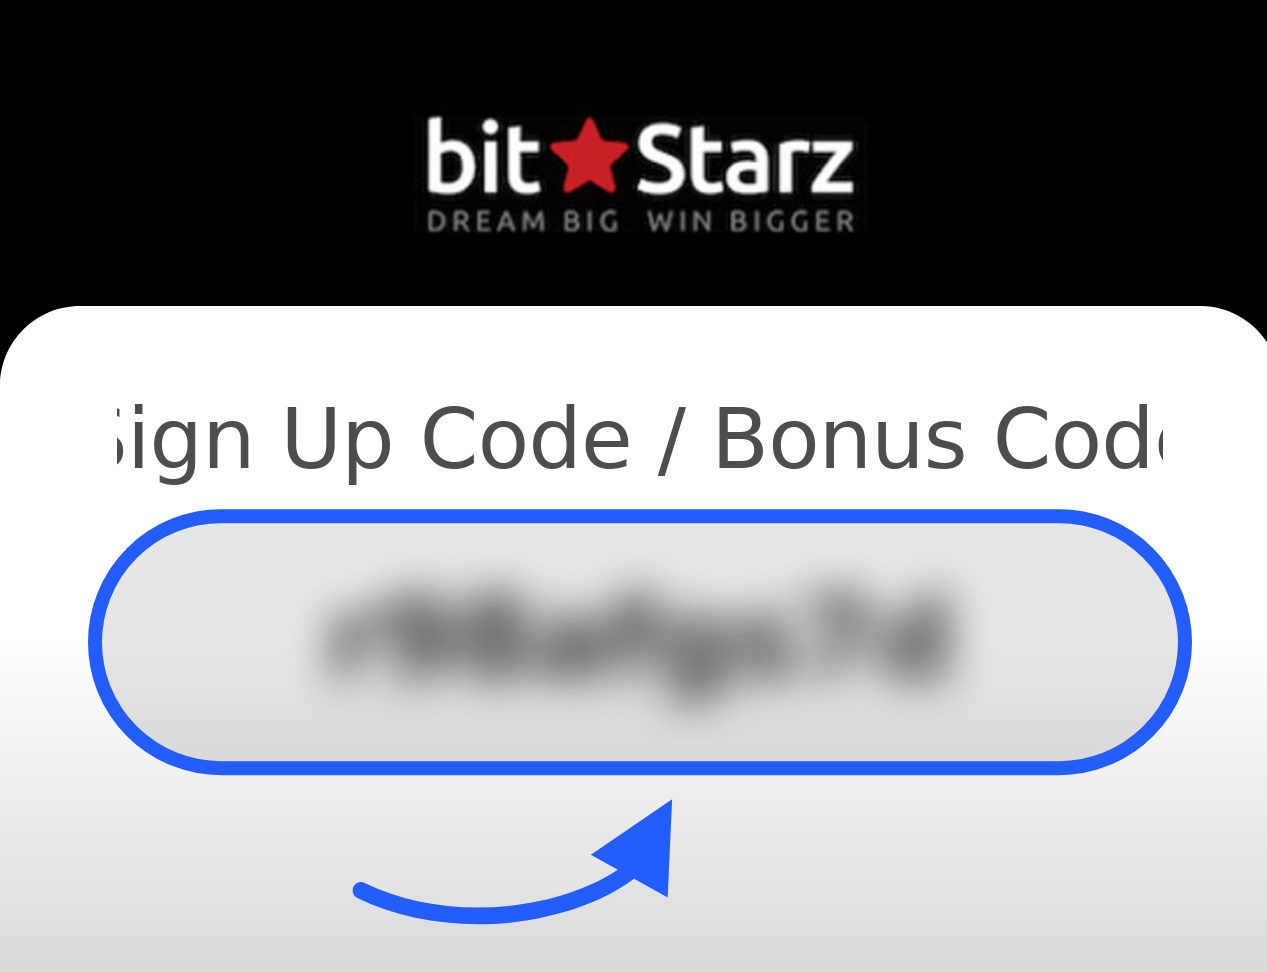 bitstarz бонусный код